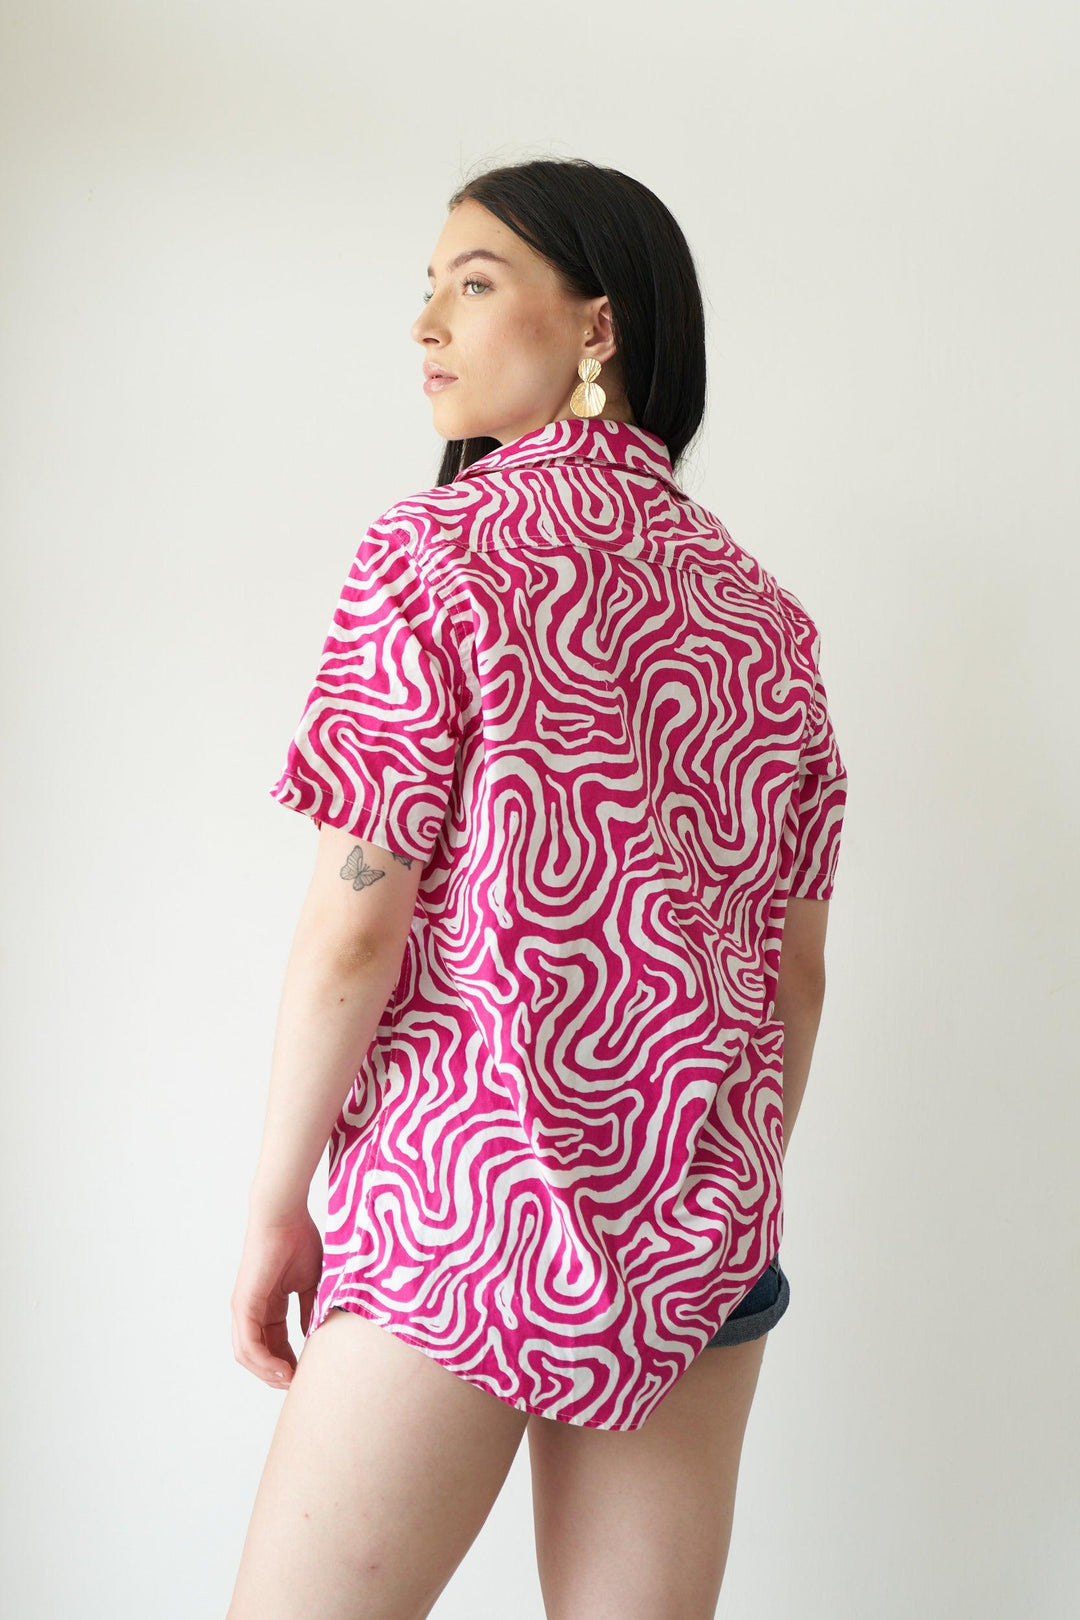 Swirl print shirt - ANI CLOTHING